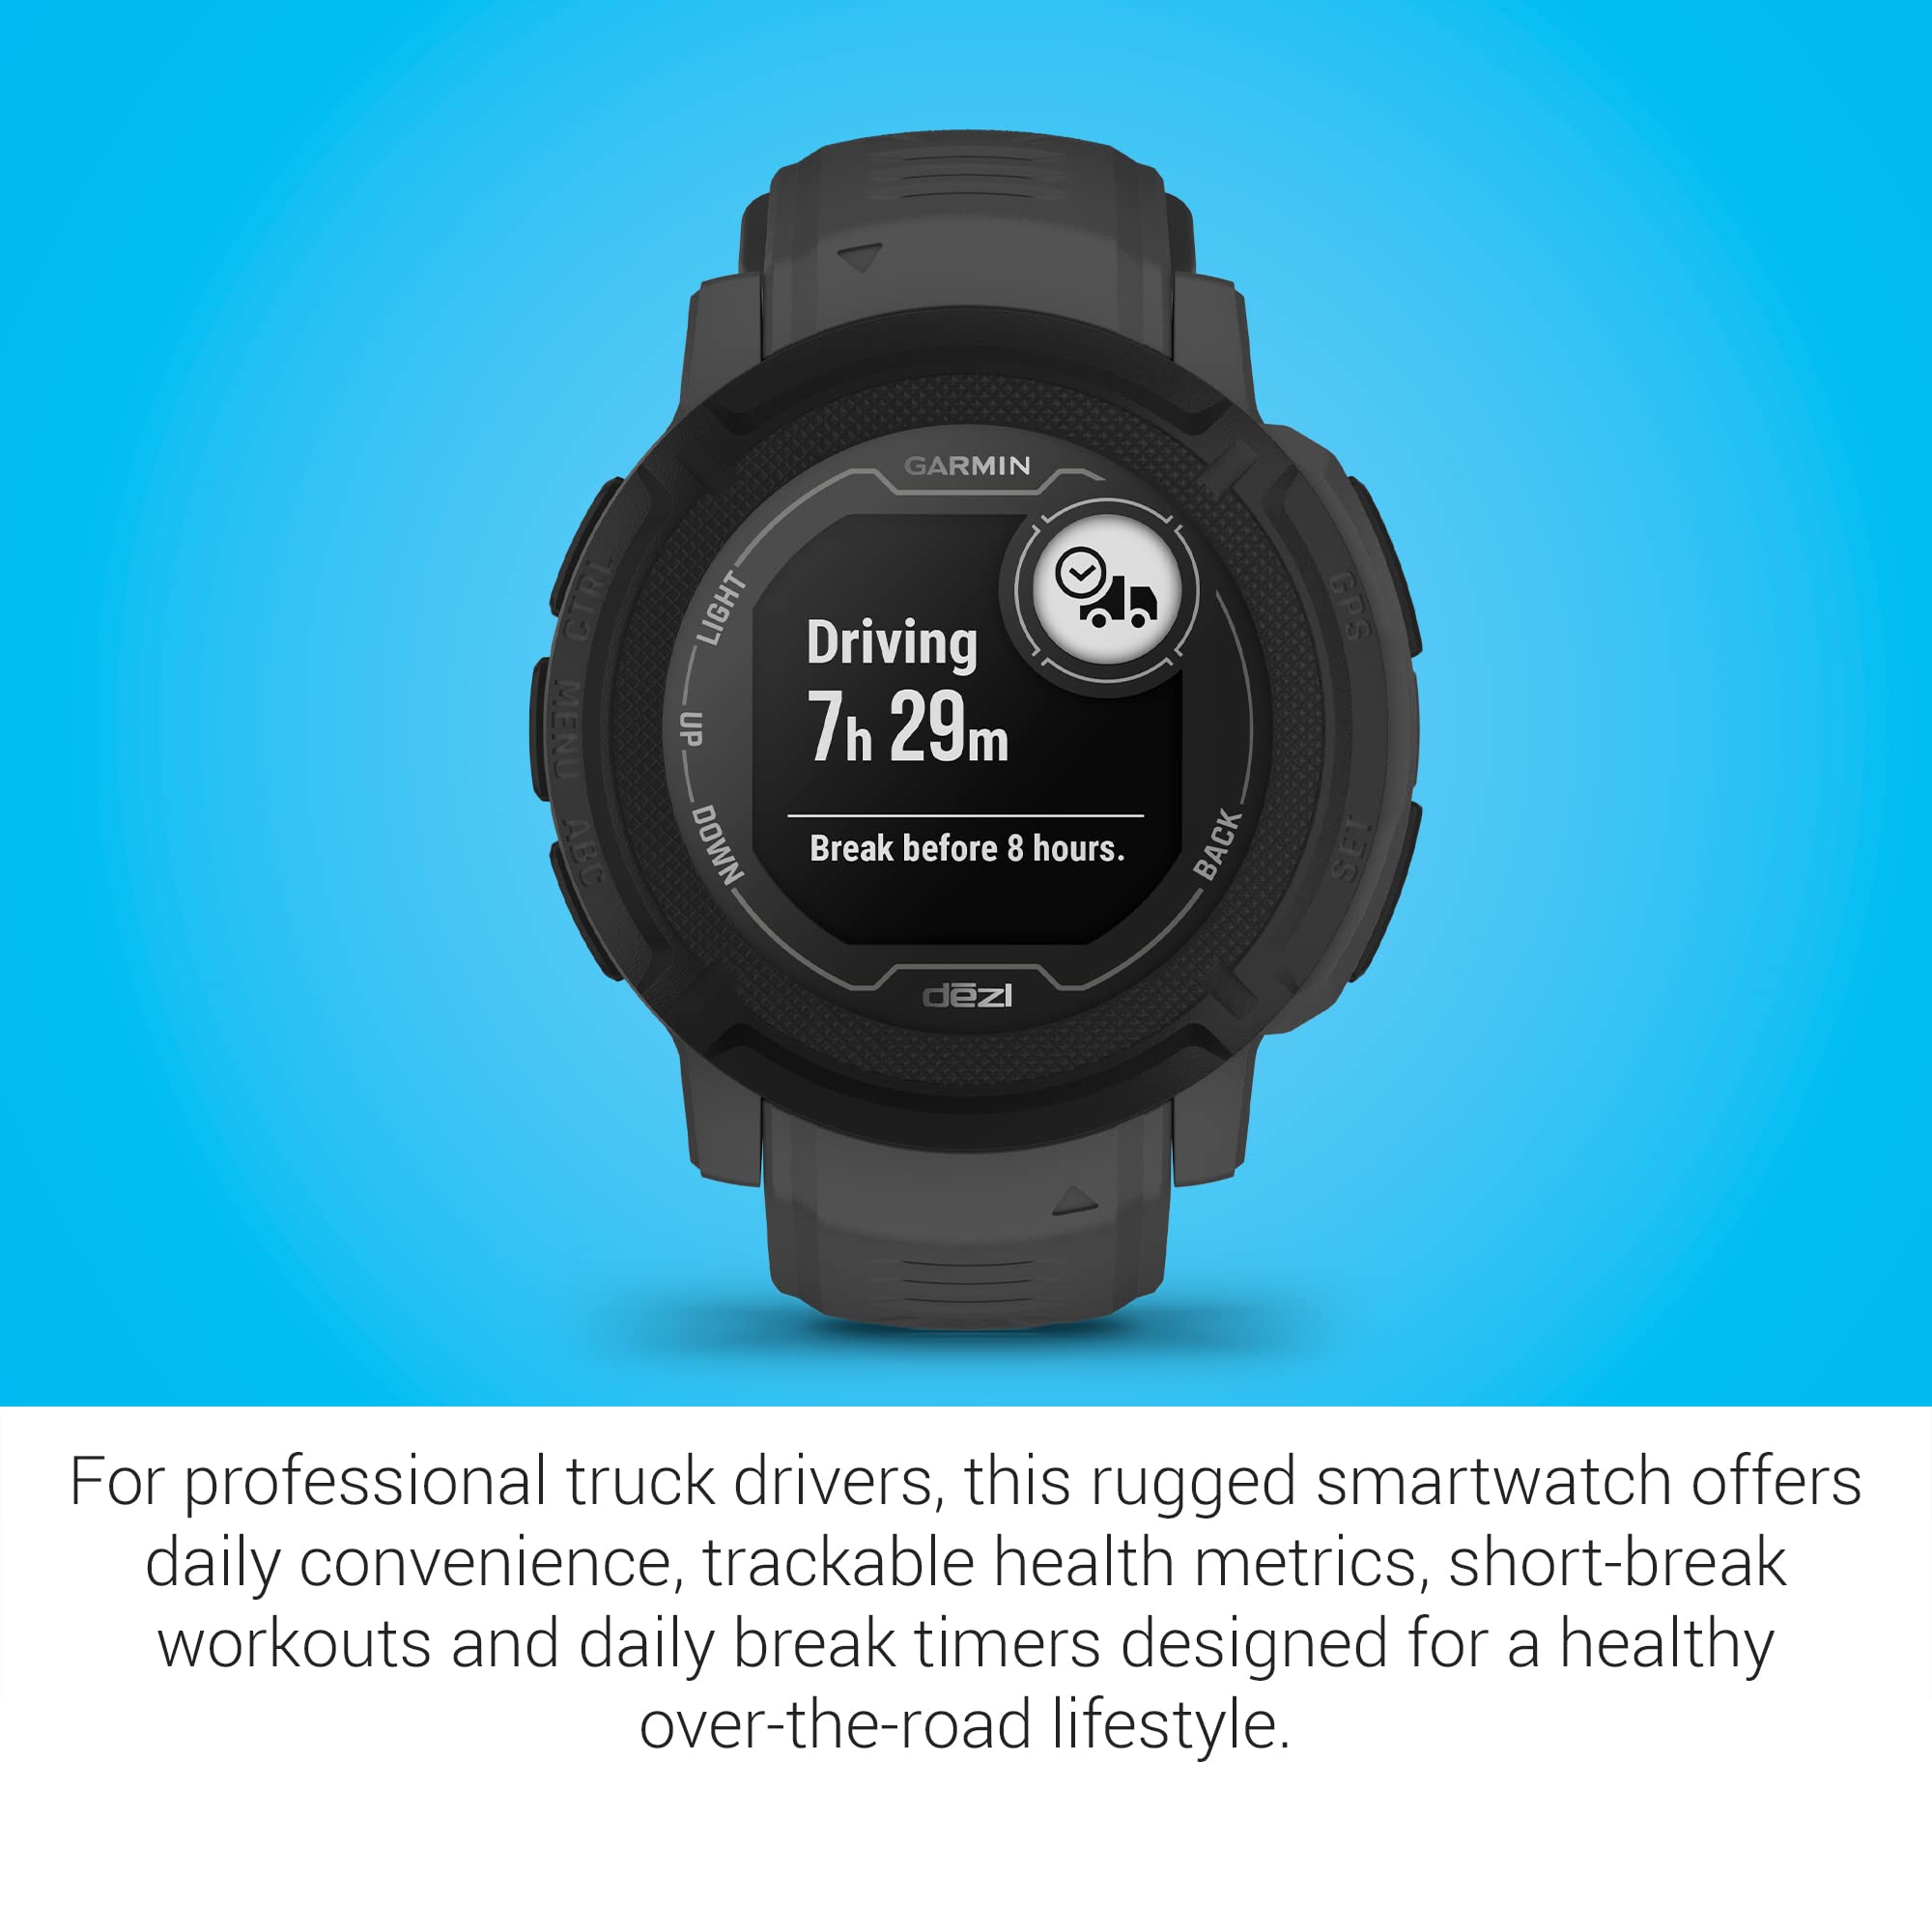 Garmin Instinct 2, dezl Edition, Rugged Trucking Smartwatch, Easy Break Planning, Compatible with the dezl OTR Navigator, Black